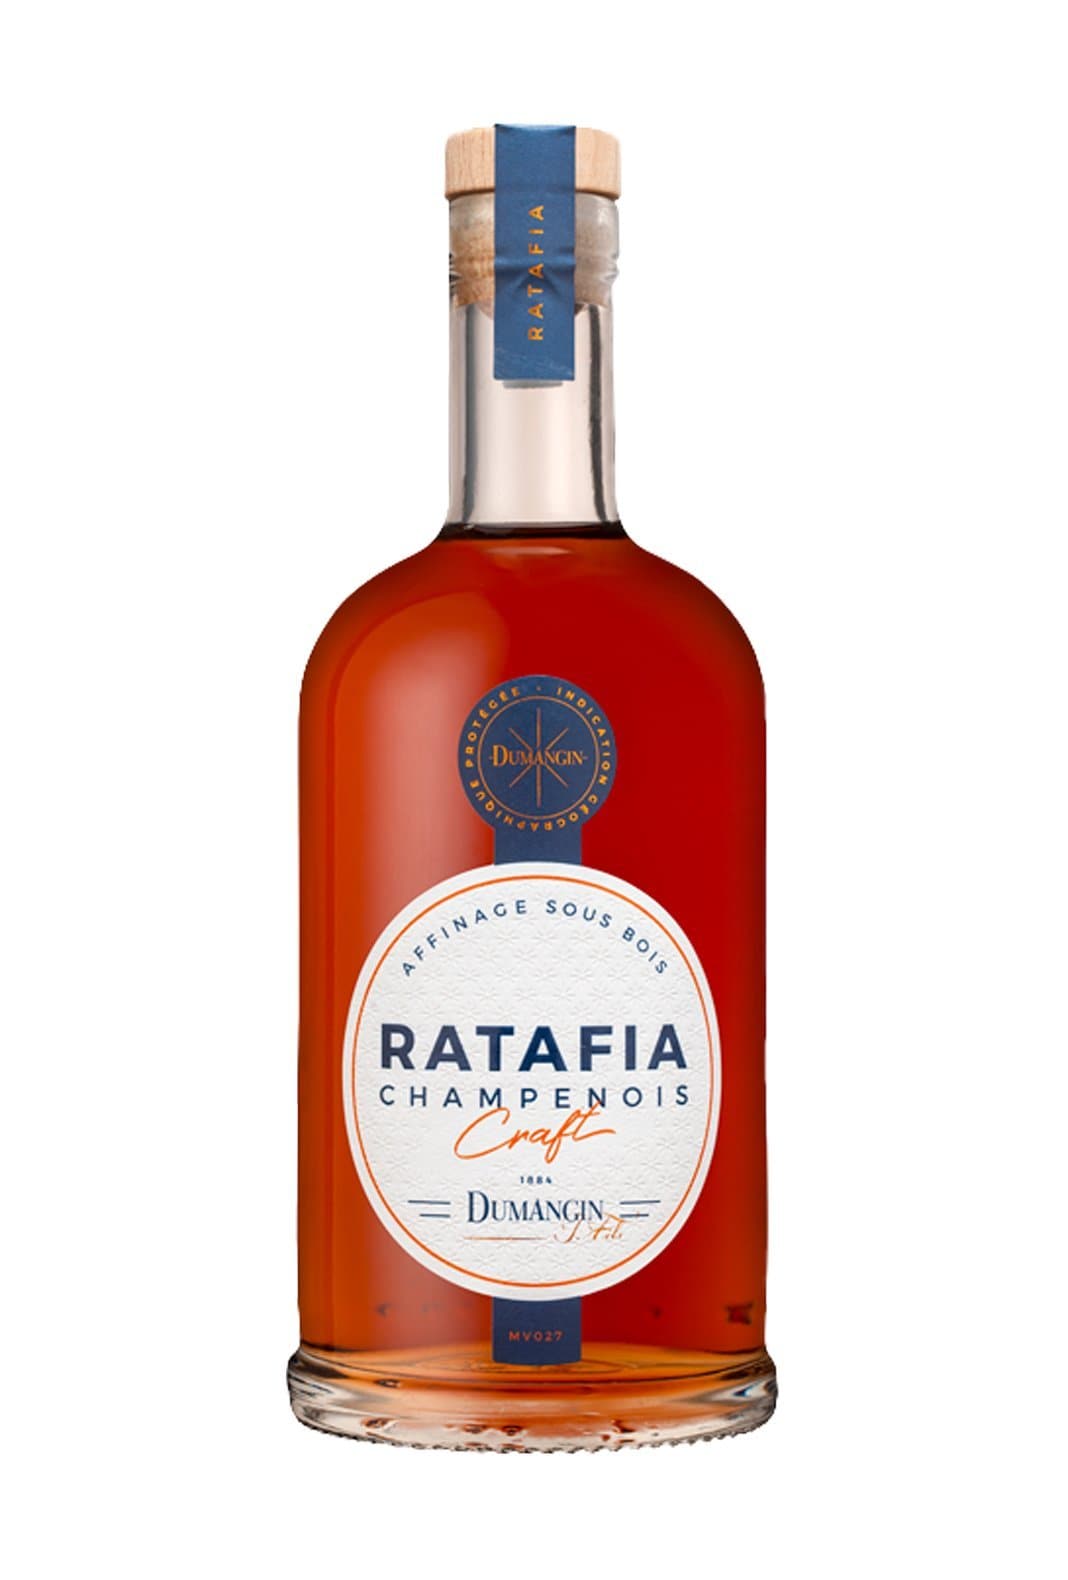 Dumangin Ratafia de Champagne 3 years+ 18% 750ml | Brandy | Shop online at Spirits of France